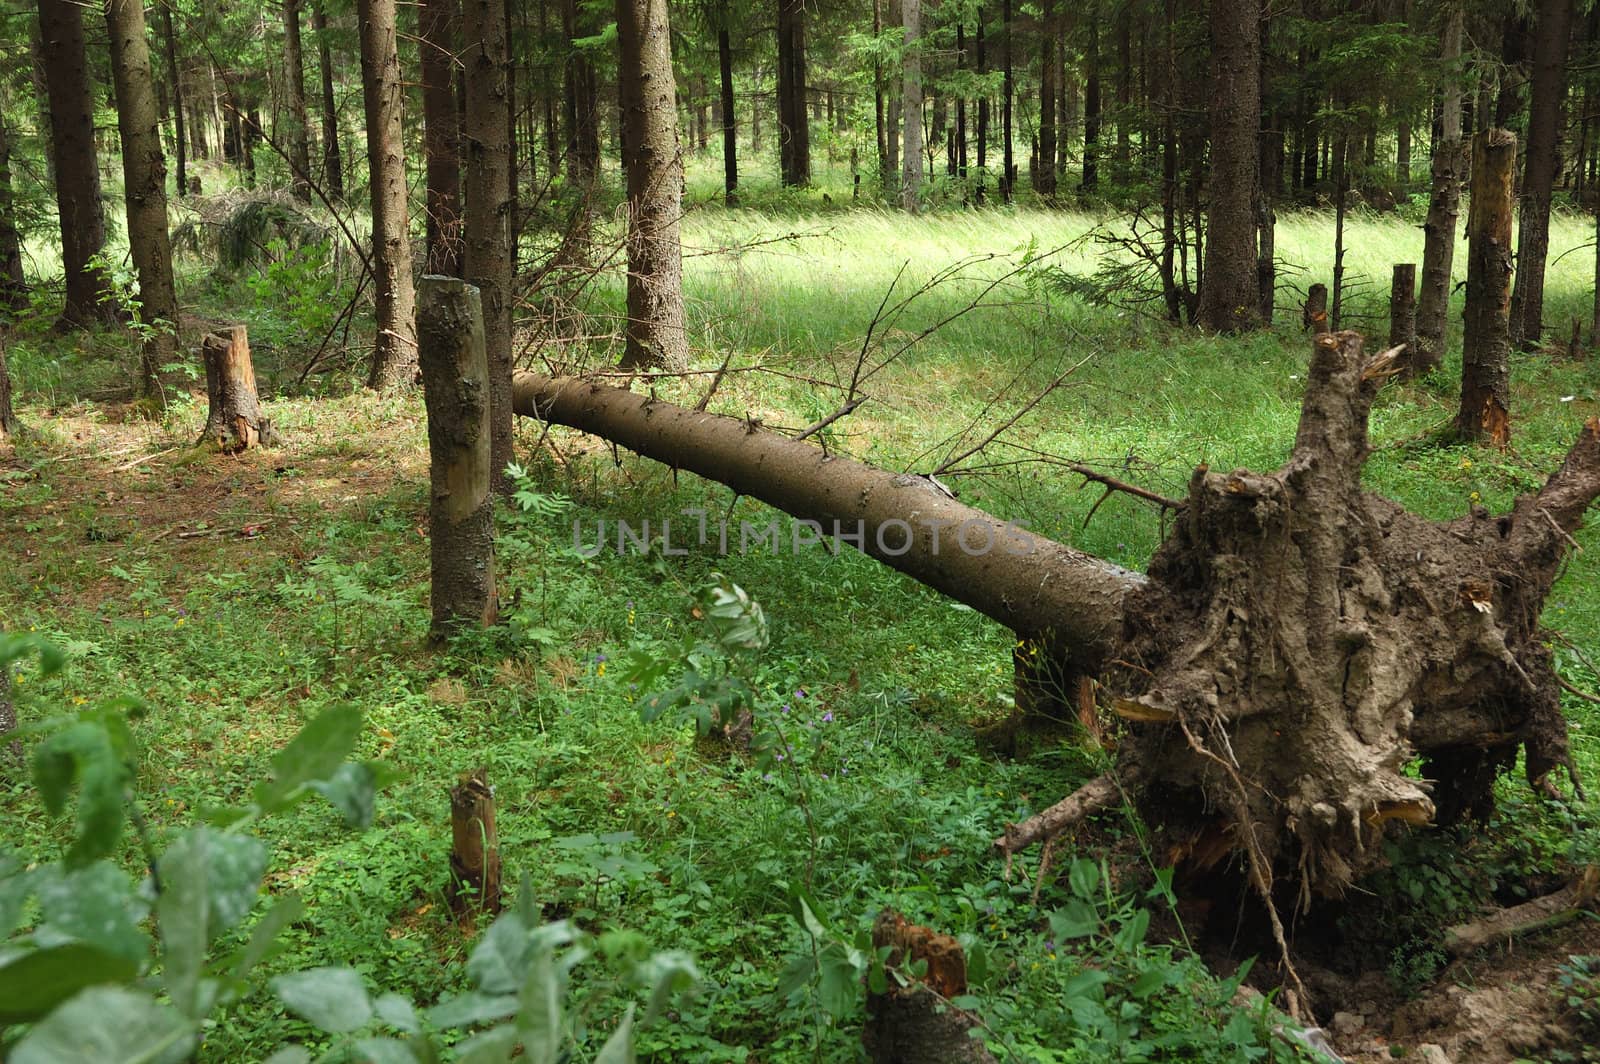 Broken fir tree in the forest by wander